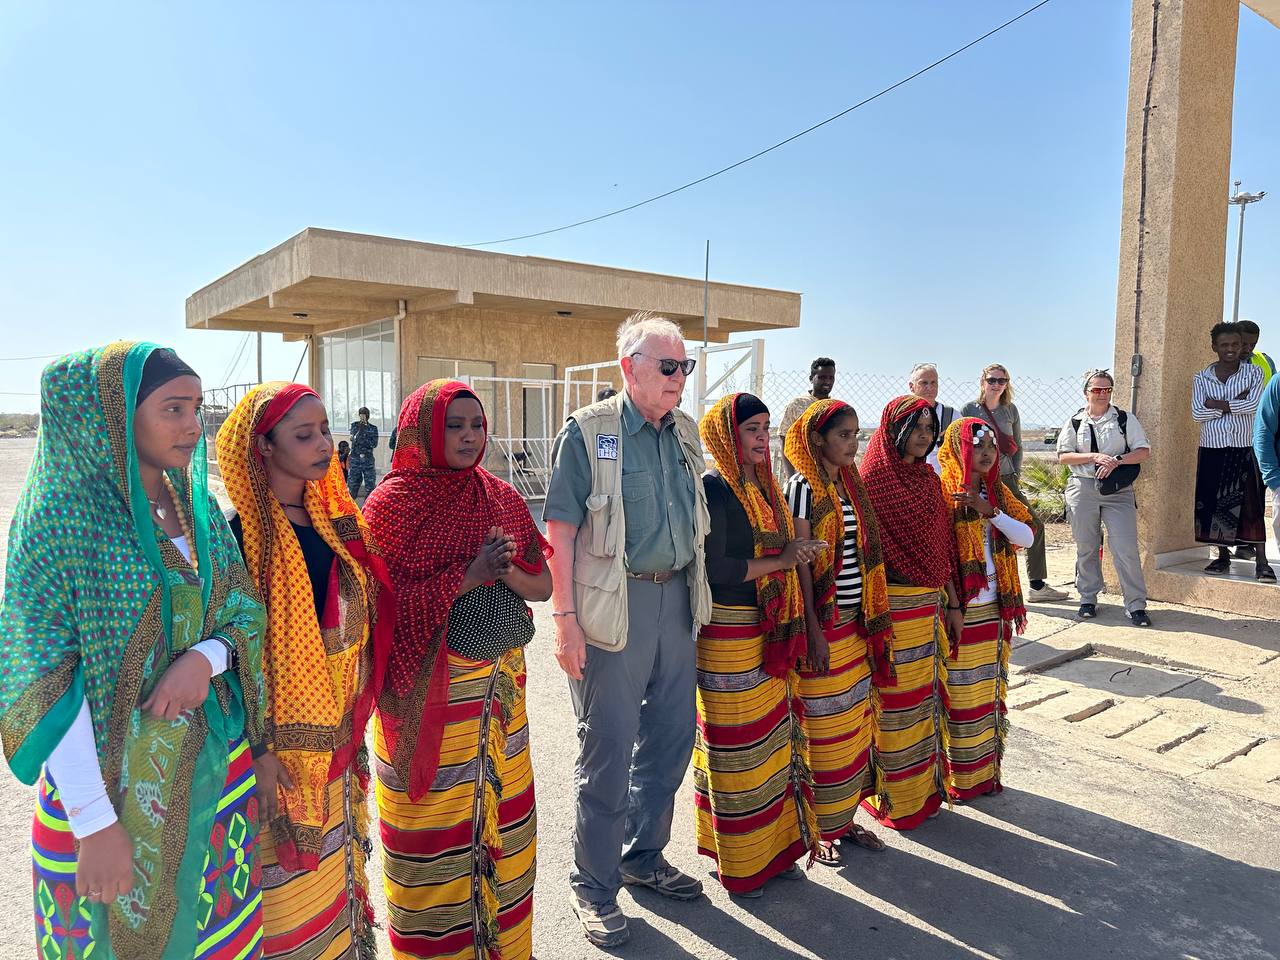 A Delegation of scientists led by Professor Donald Johanson arrived at Samara